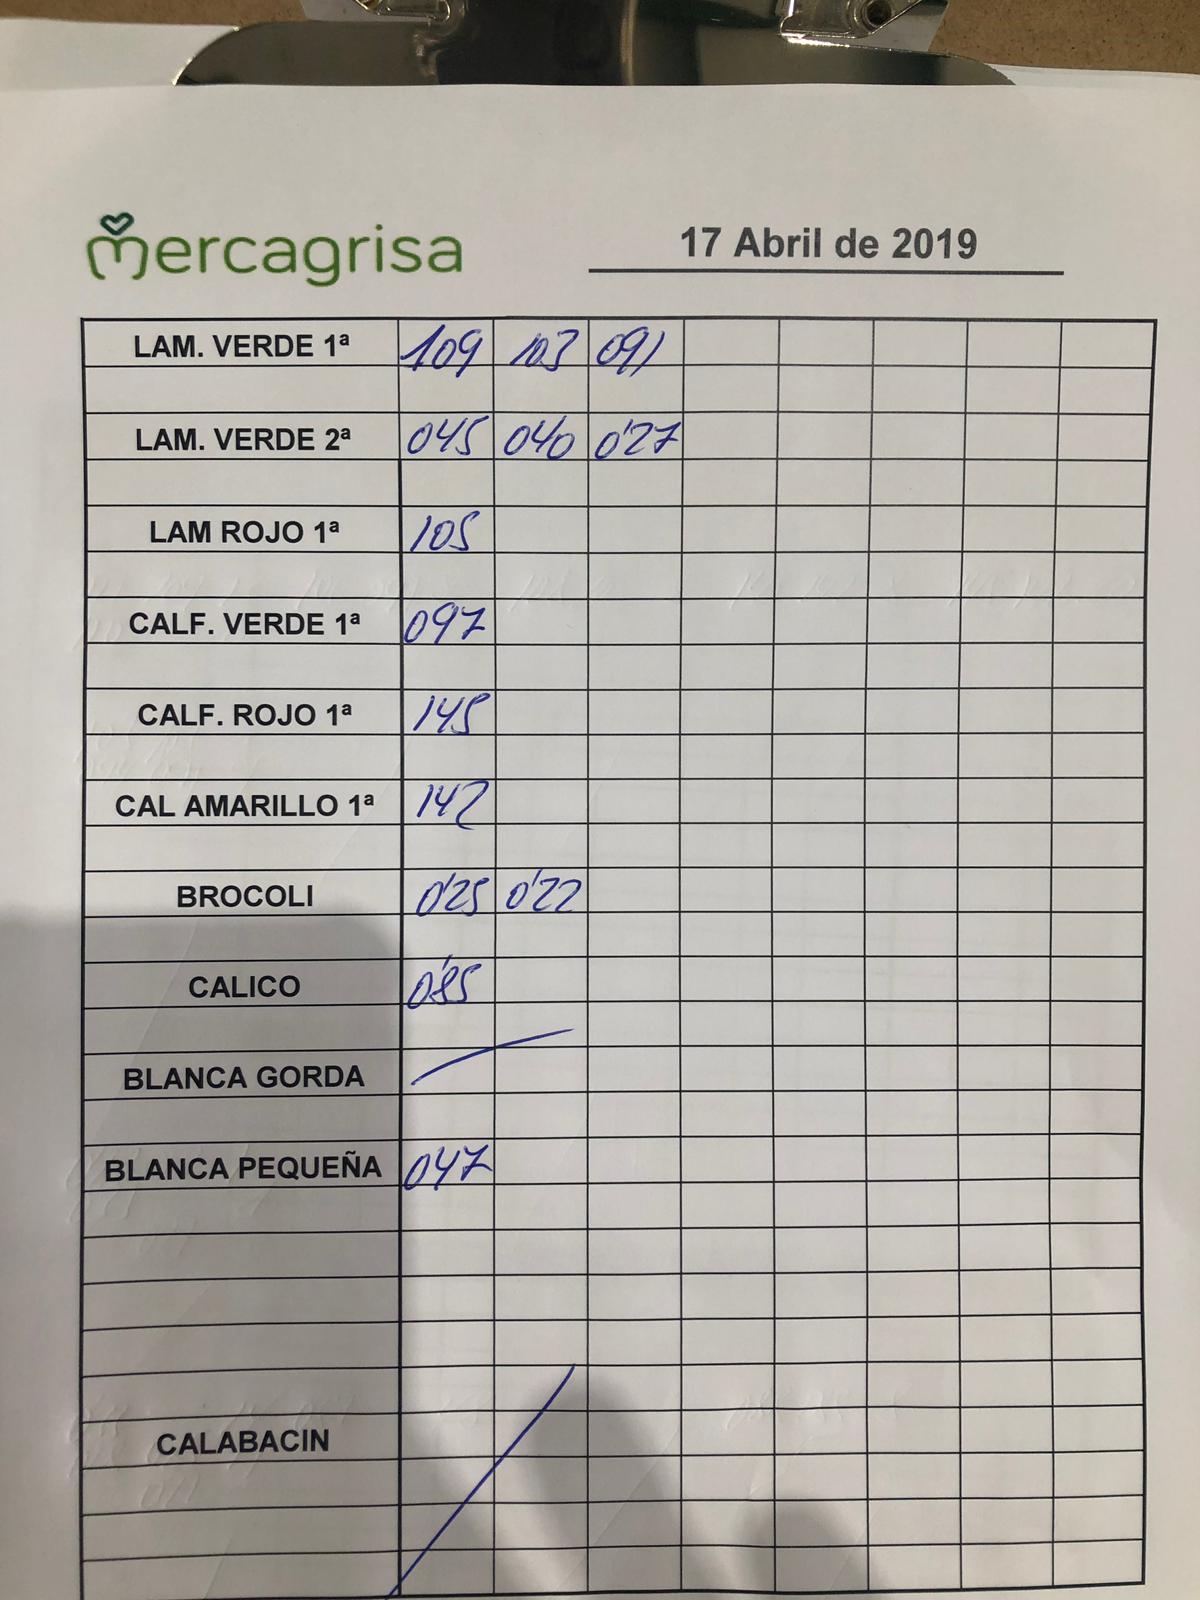 Subasta hortofrutícola Mercagrisa 17 de Abril 2019